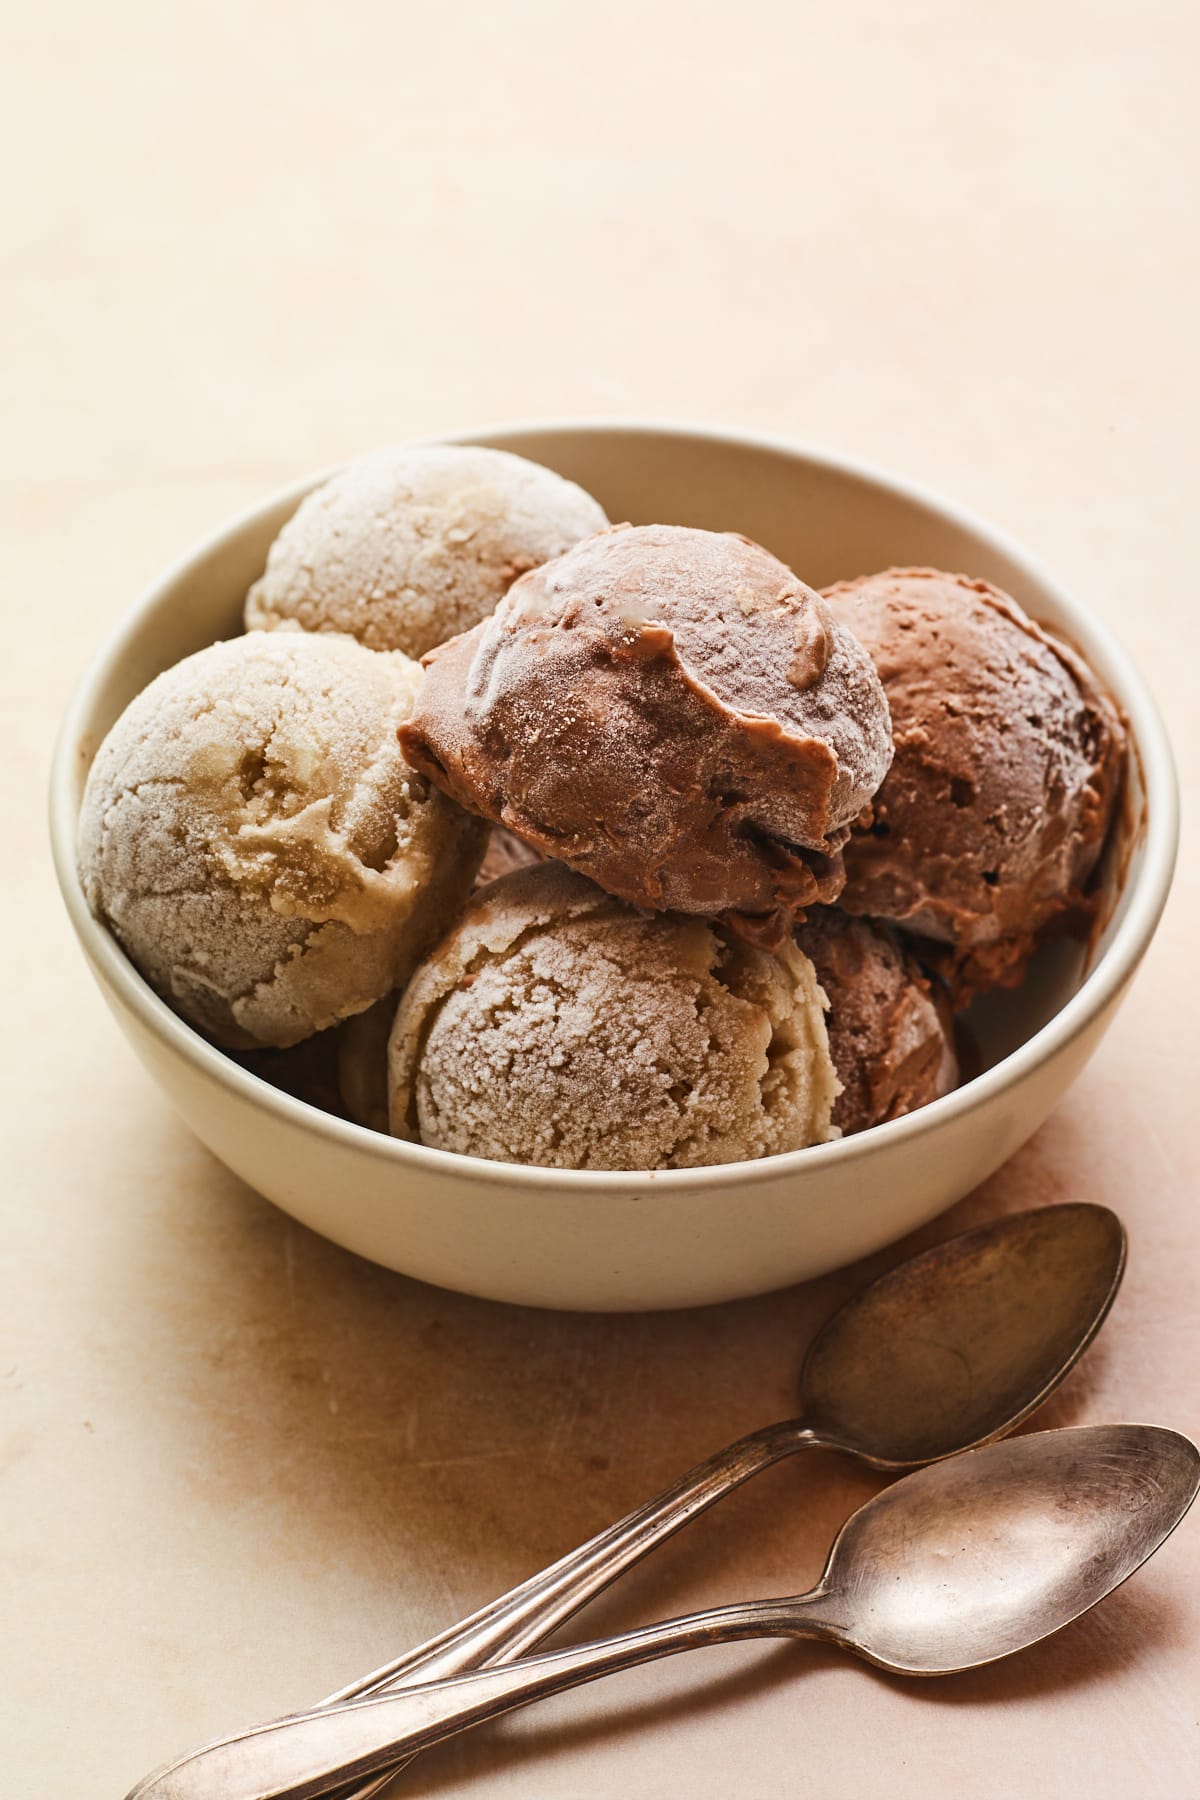 Ninja creami 150 calorie rich chocolate protein ice cream - no pudding mix  : r/Volumeeating